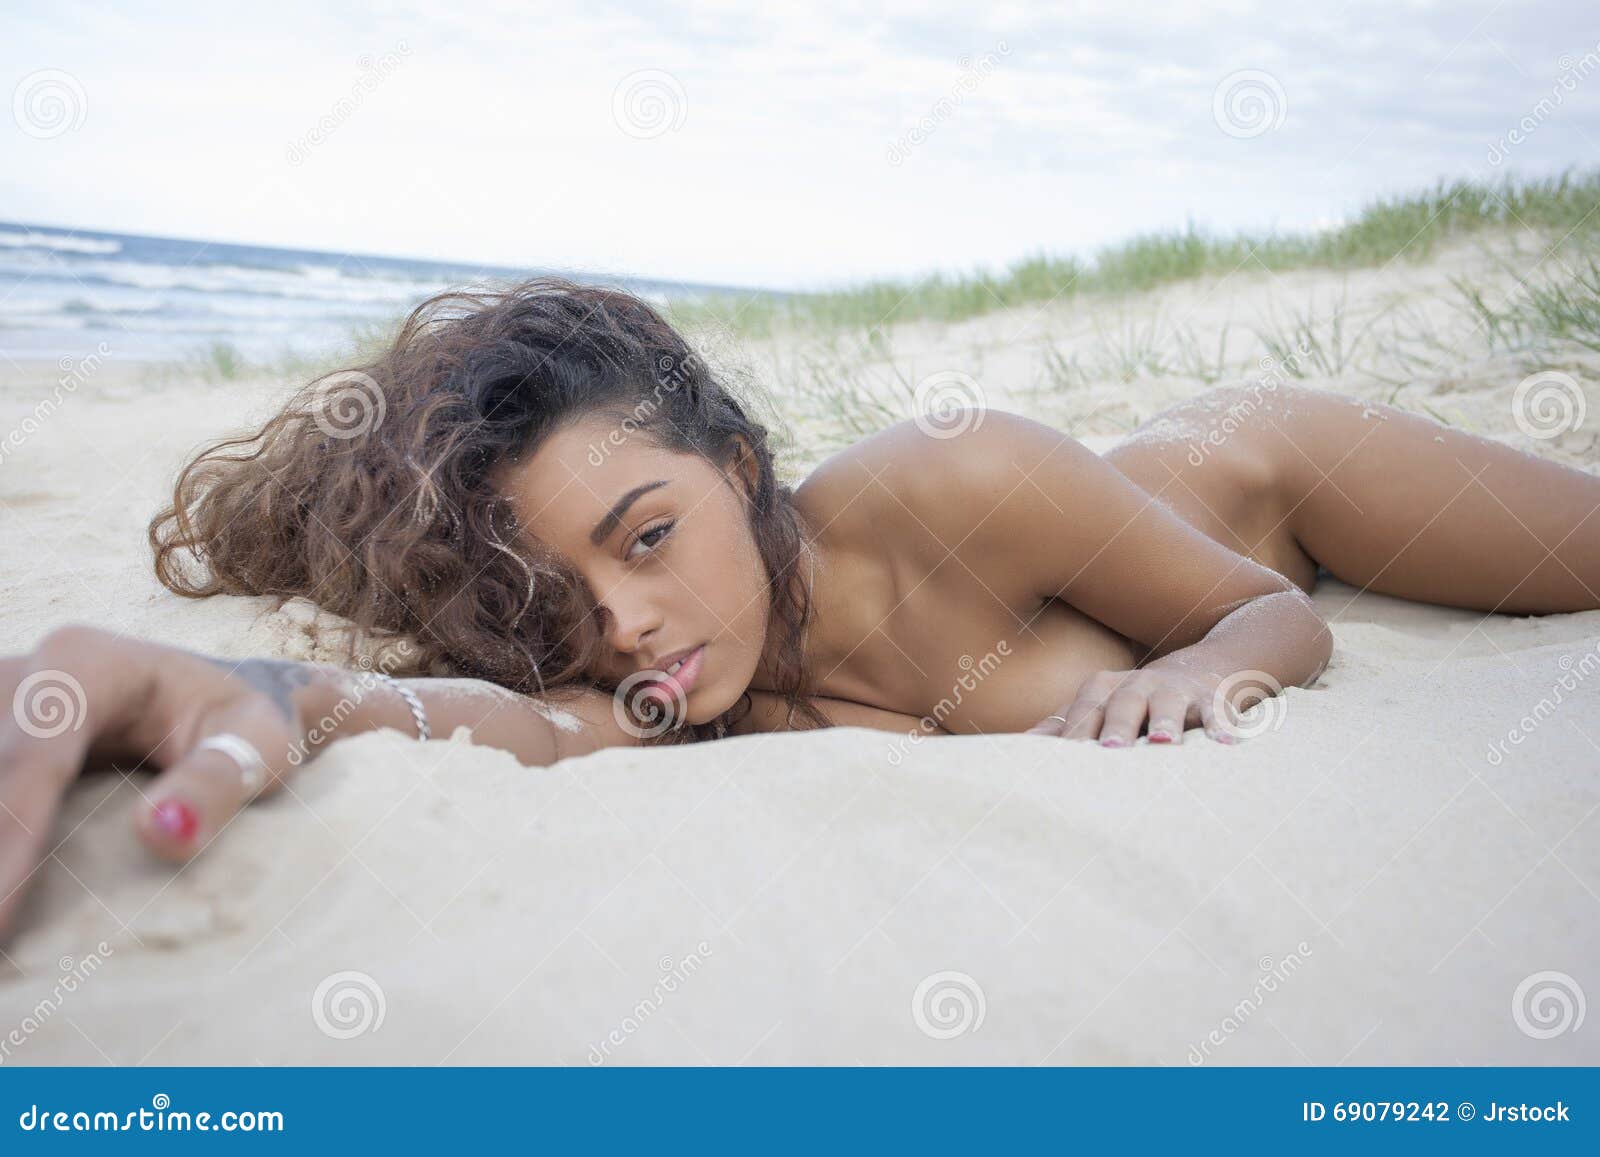 bare women on beach